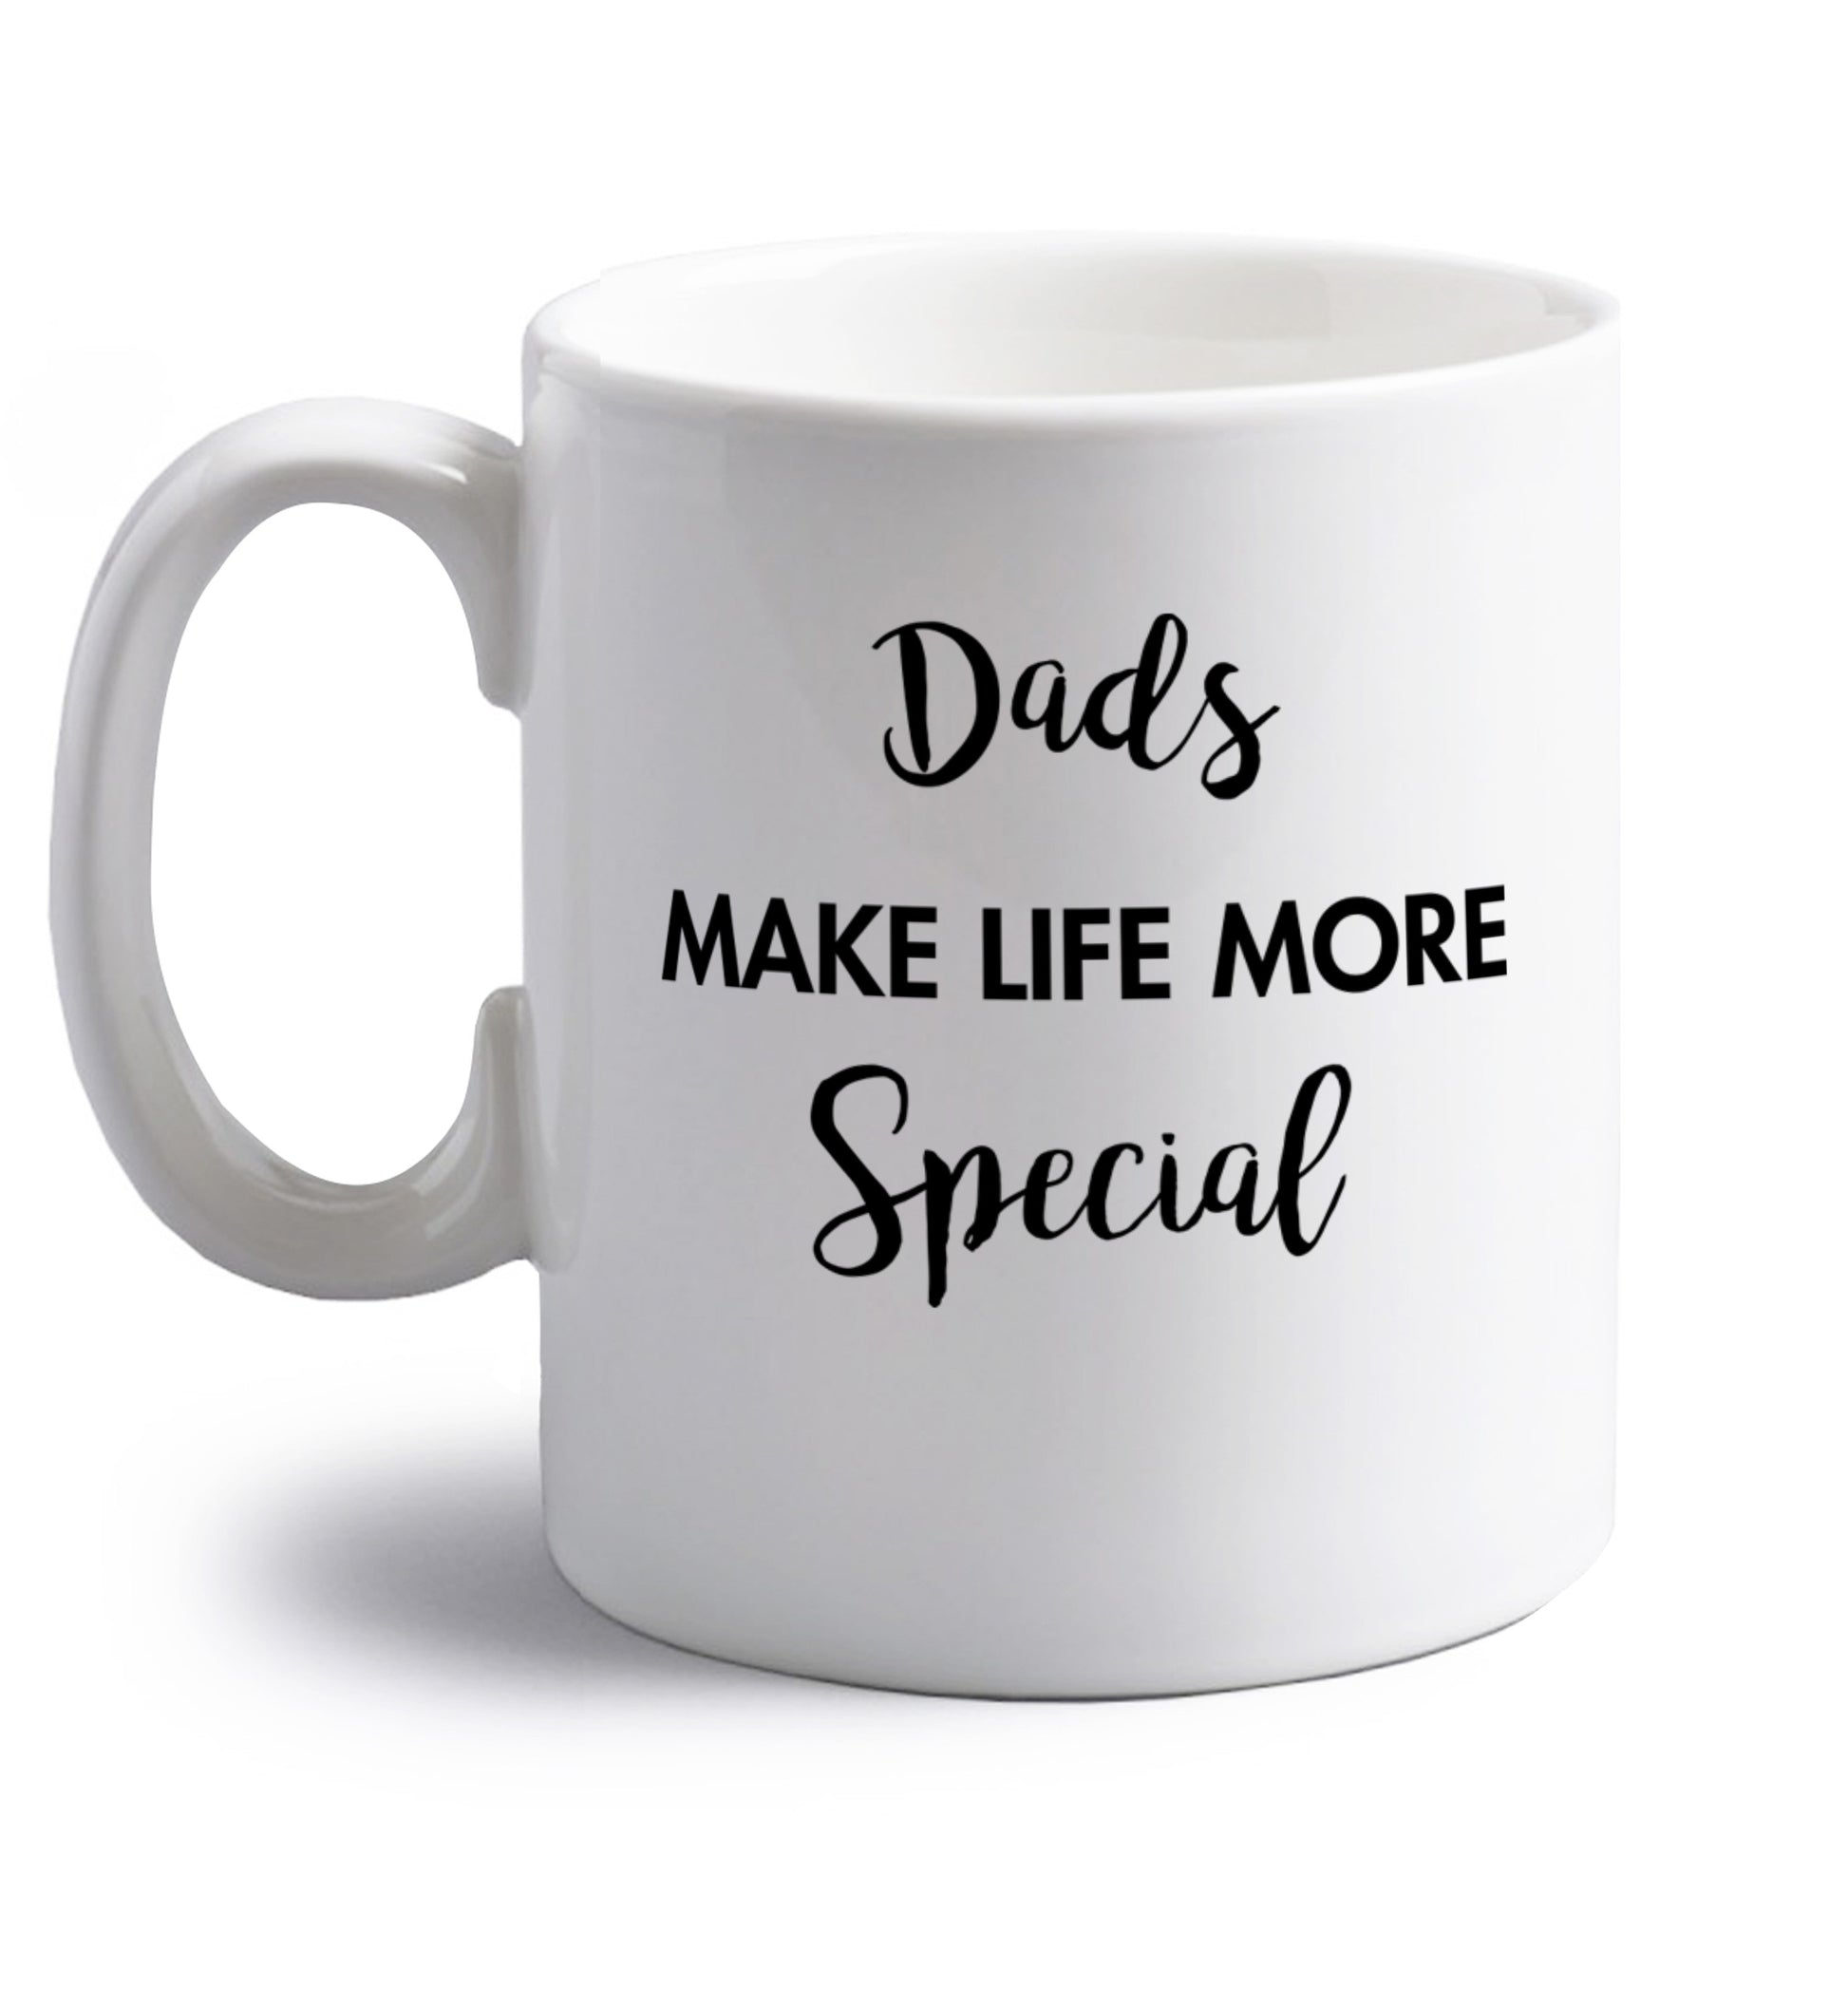 Dads make life more special right handed white ceramic mug 